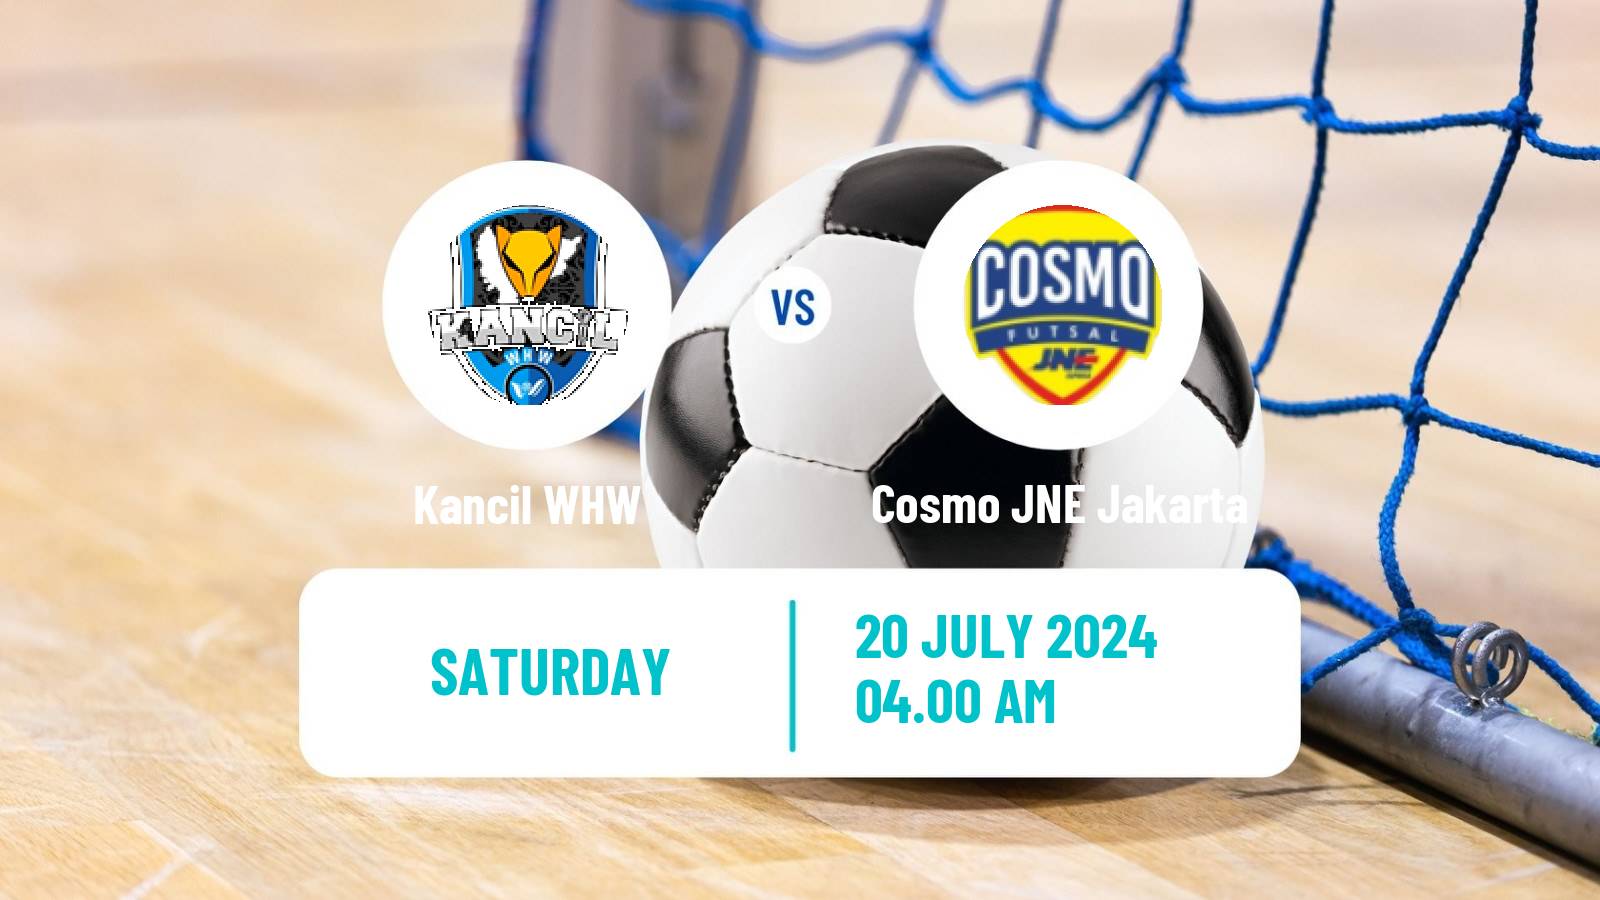 Futsal Indonesian Pro Futsal League Kancil WHW - Cosmo JNE Jakarta